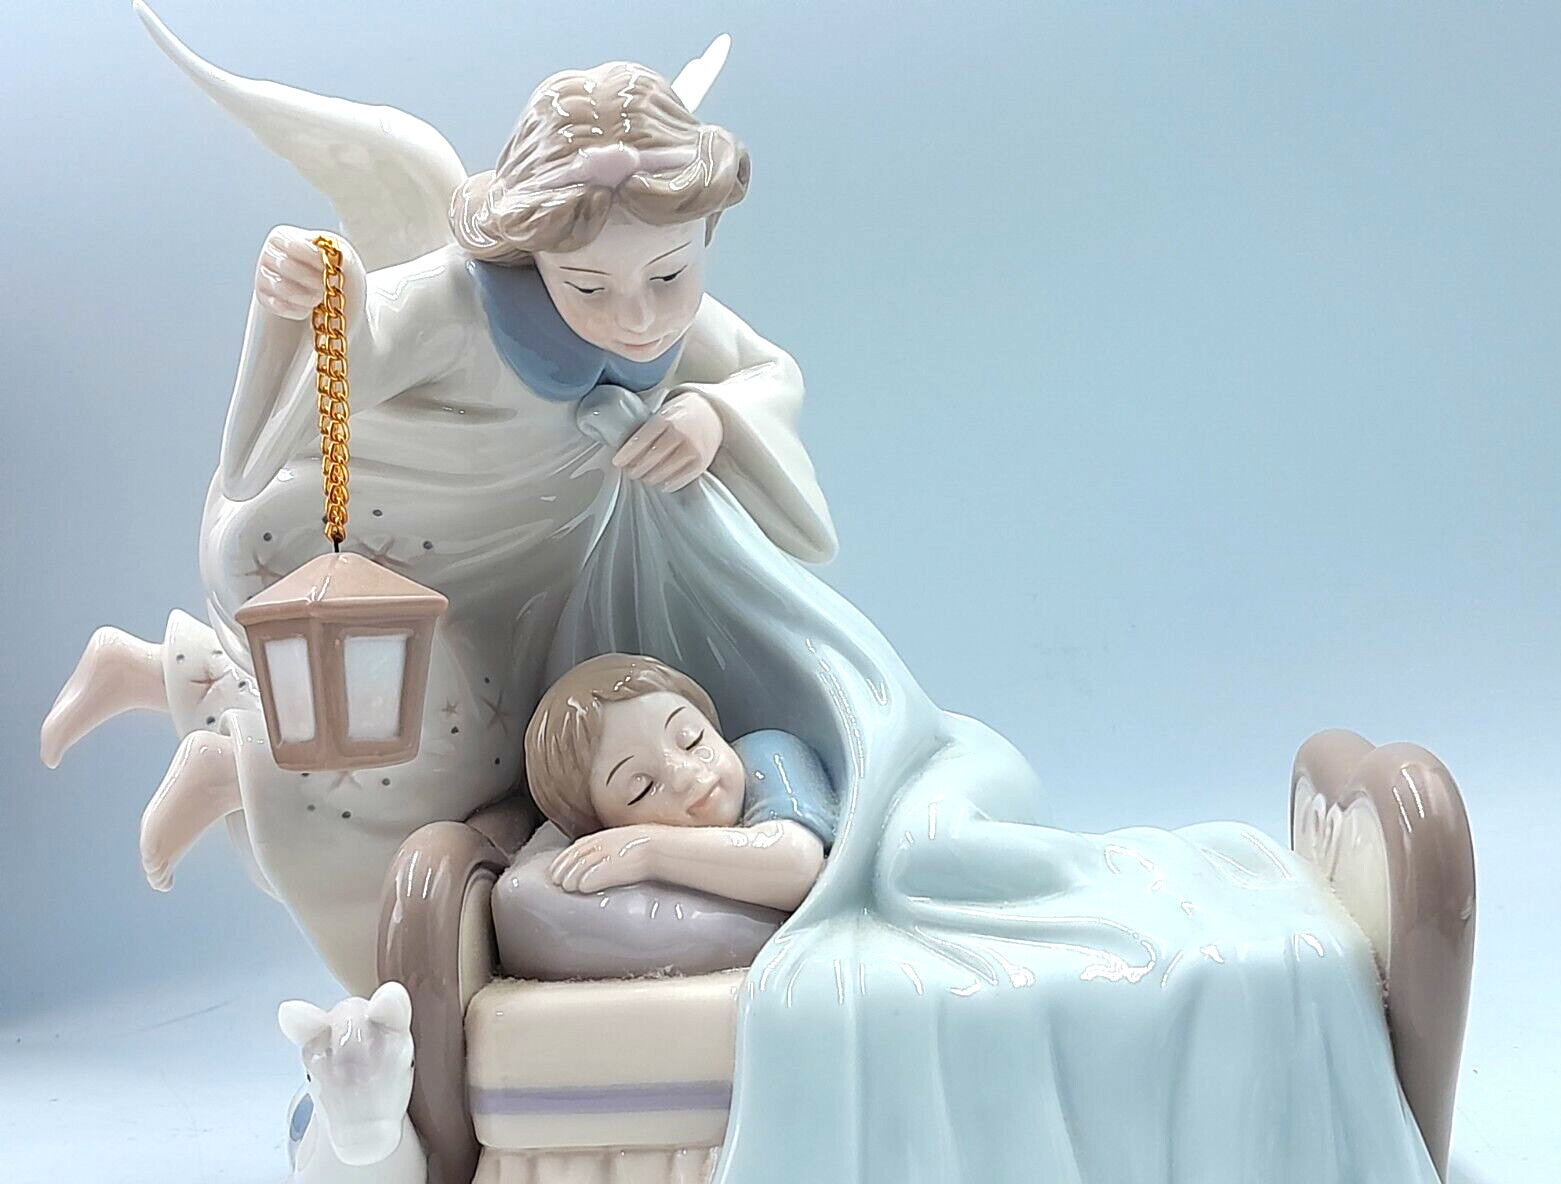 Exquisite Spanish Ceramic Guardian Angel Figurine w/ Lantern Child Donkey Hearts